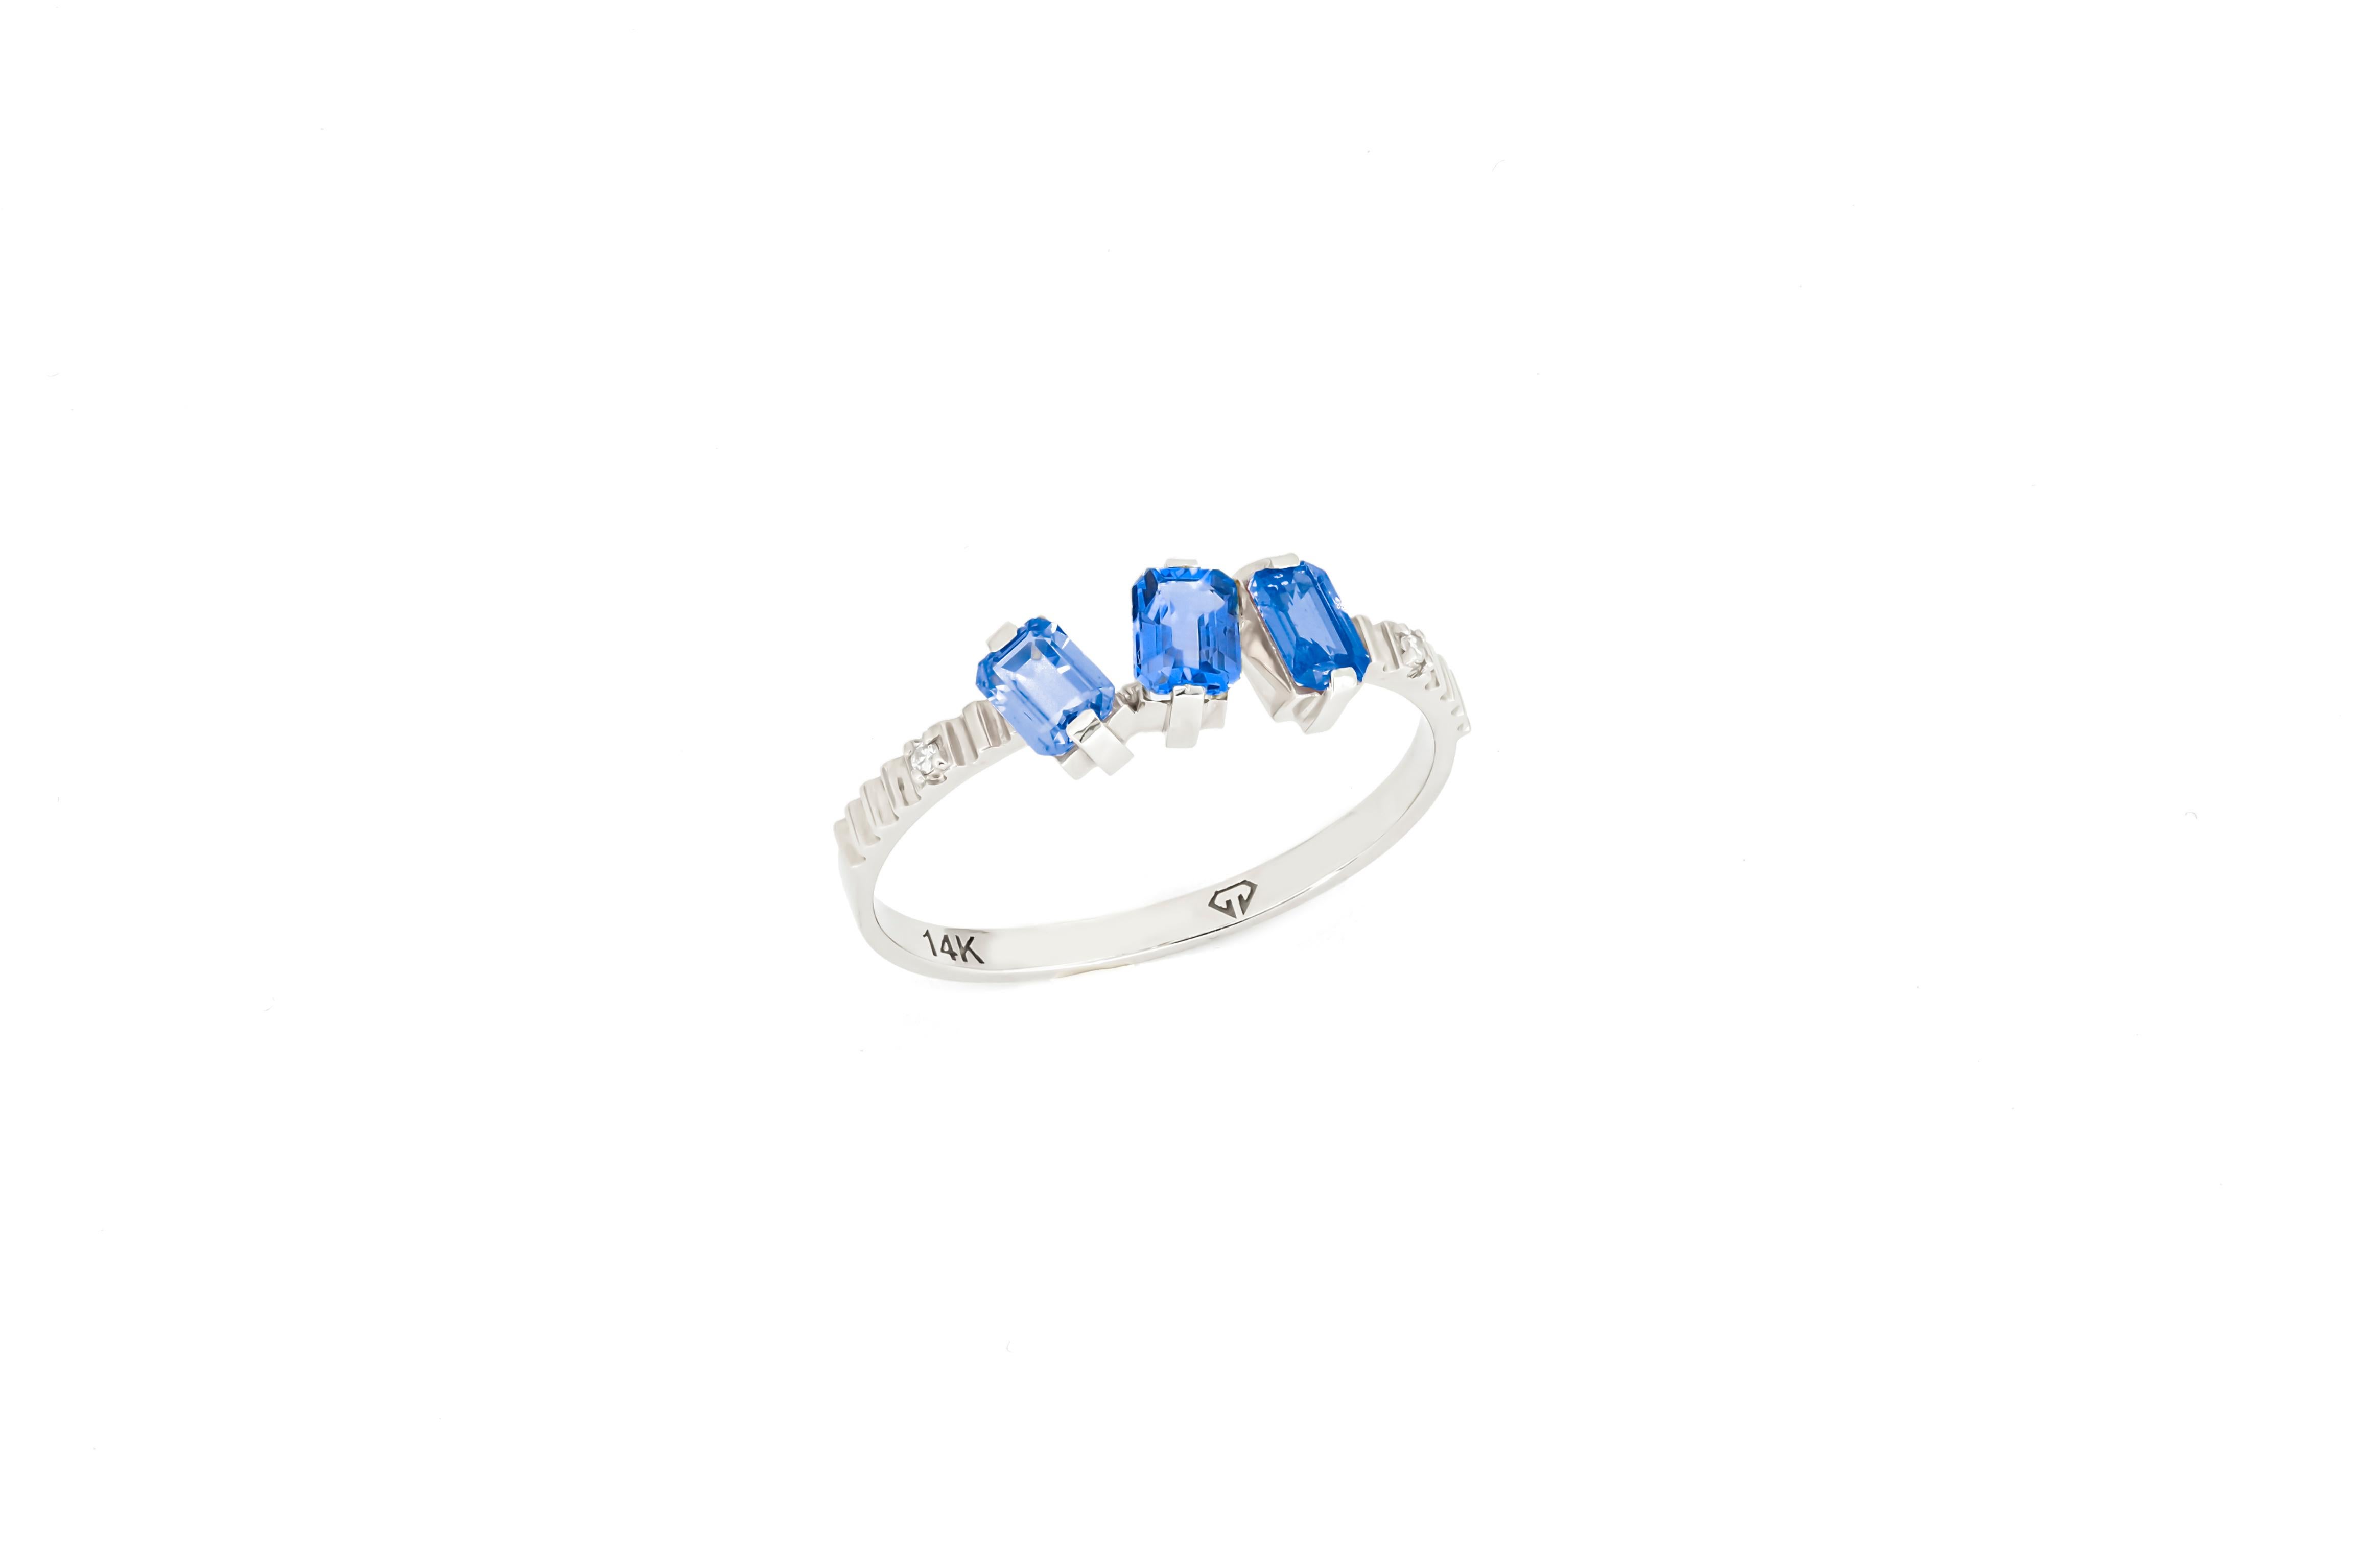 Women's Monochrome blue gemstone 14k ring.  For Sale